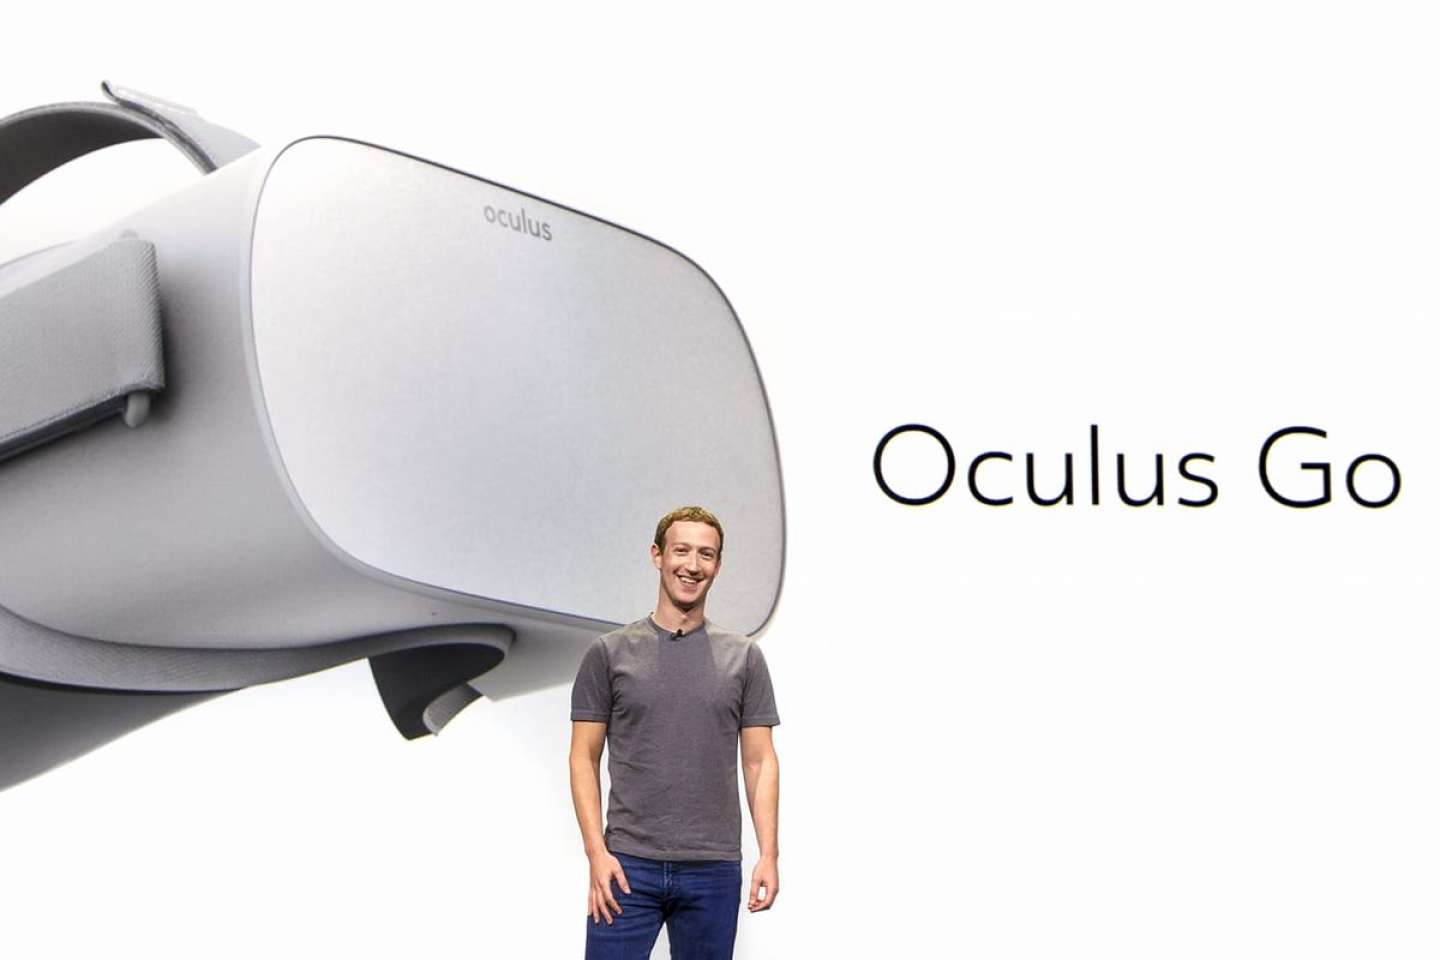 Facebook announces Oculus Go, a $200 wearable virtual reality headset